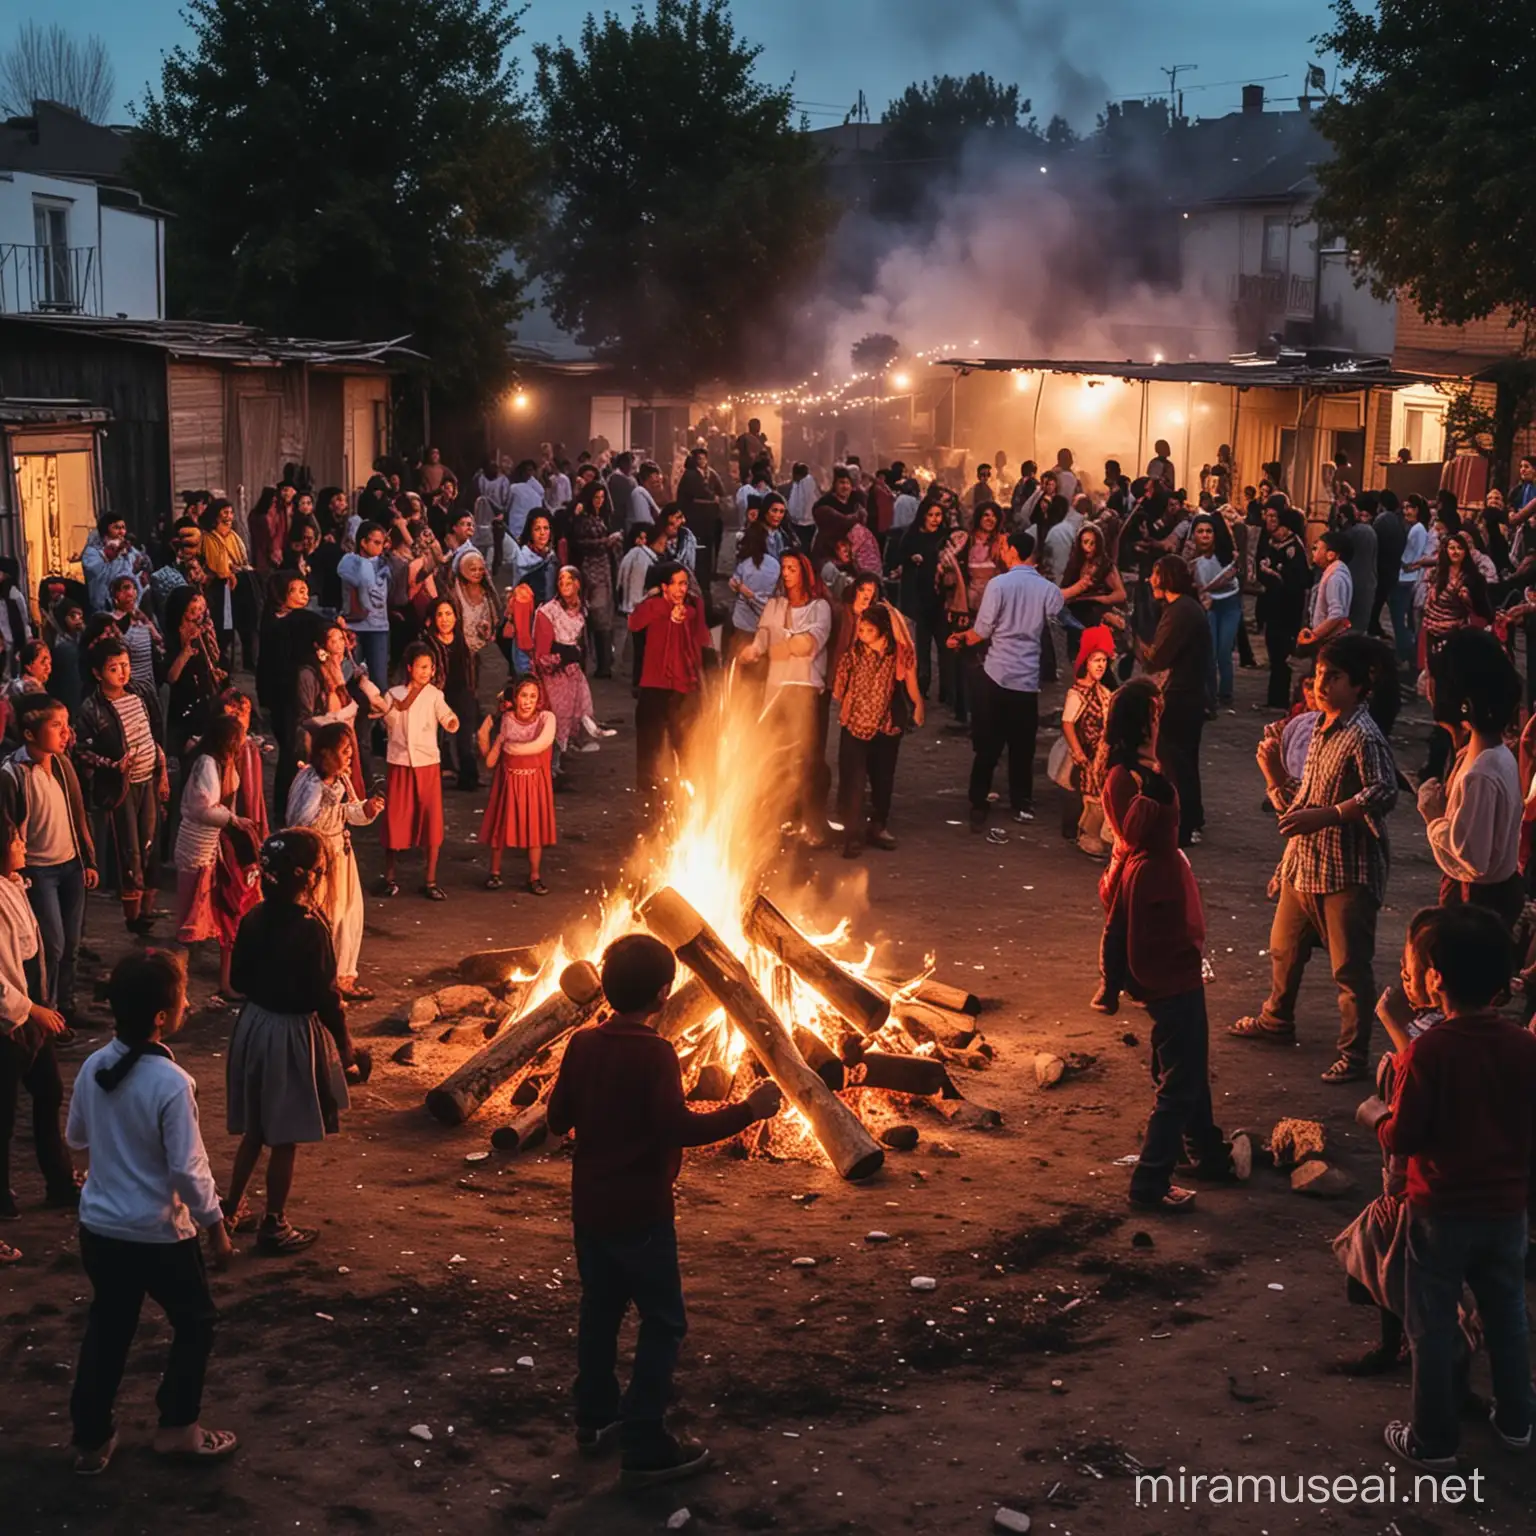 Gypsy Community Celebrating Around Bonfire in Residential Backyard